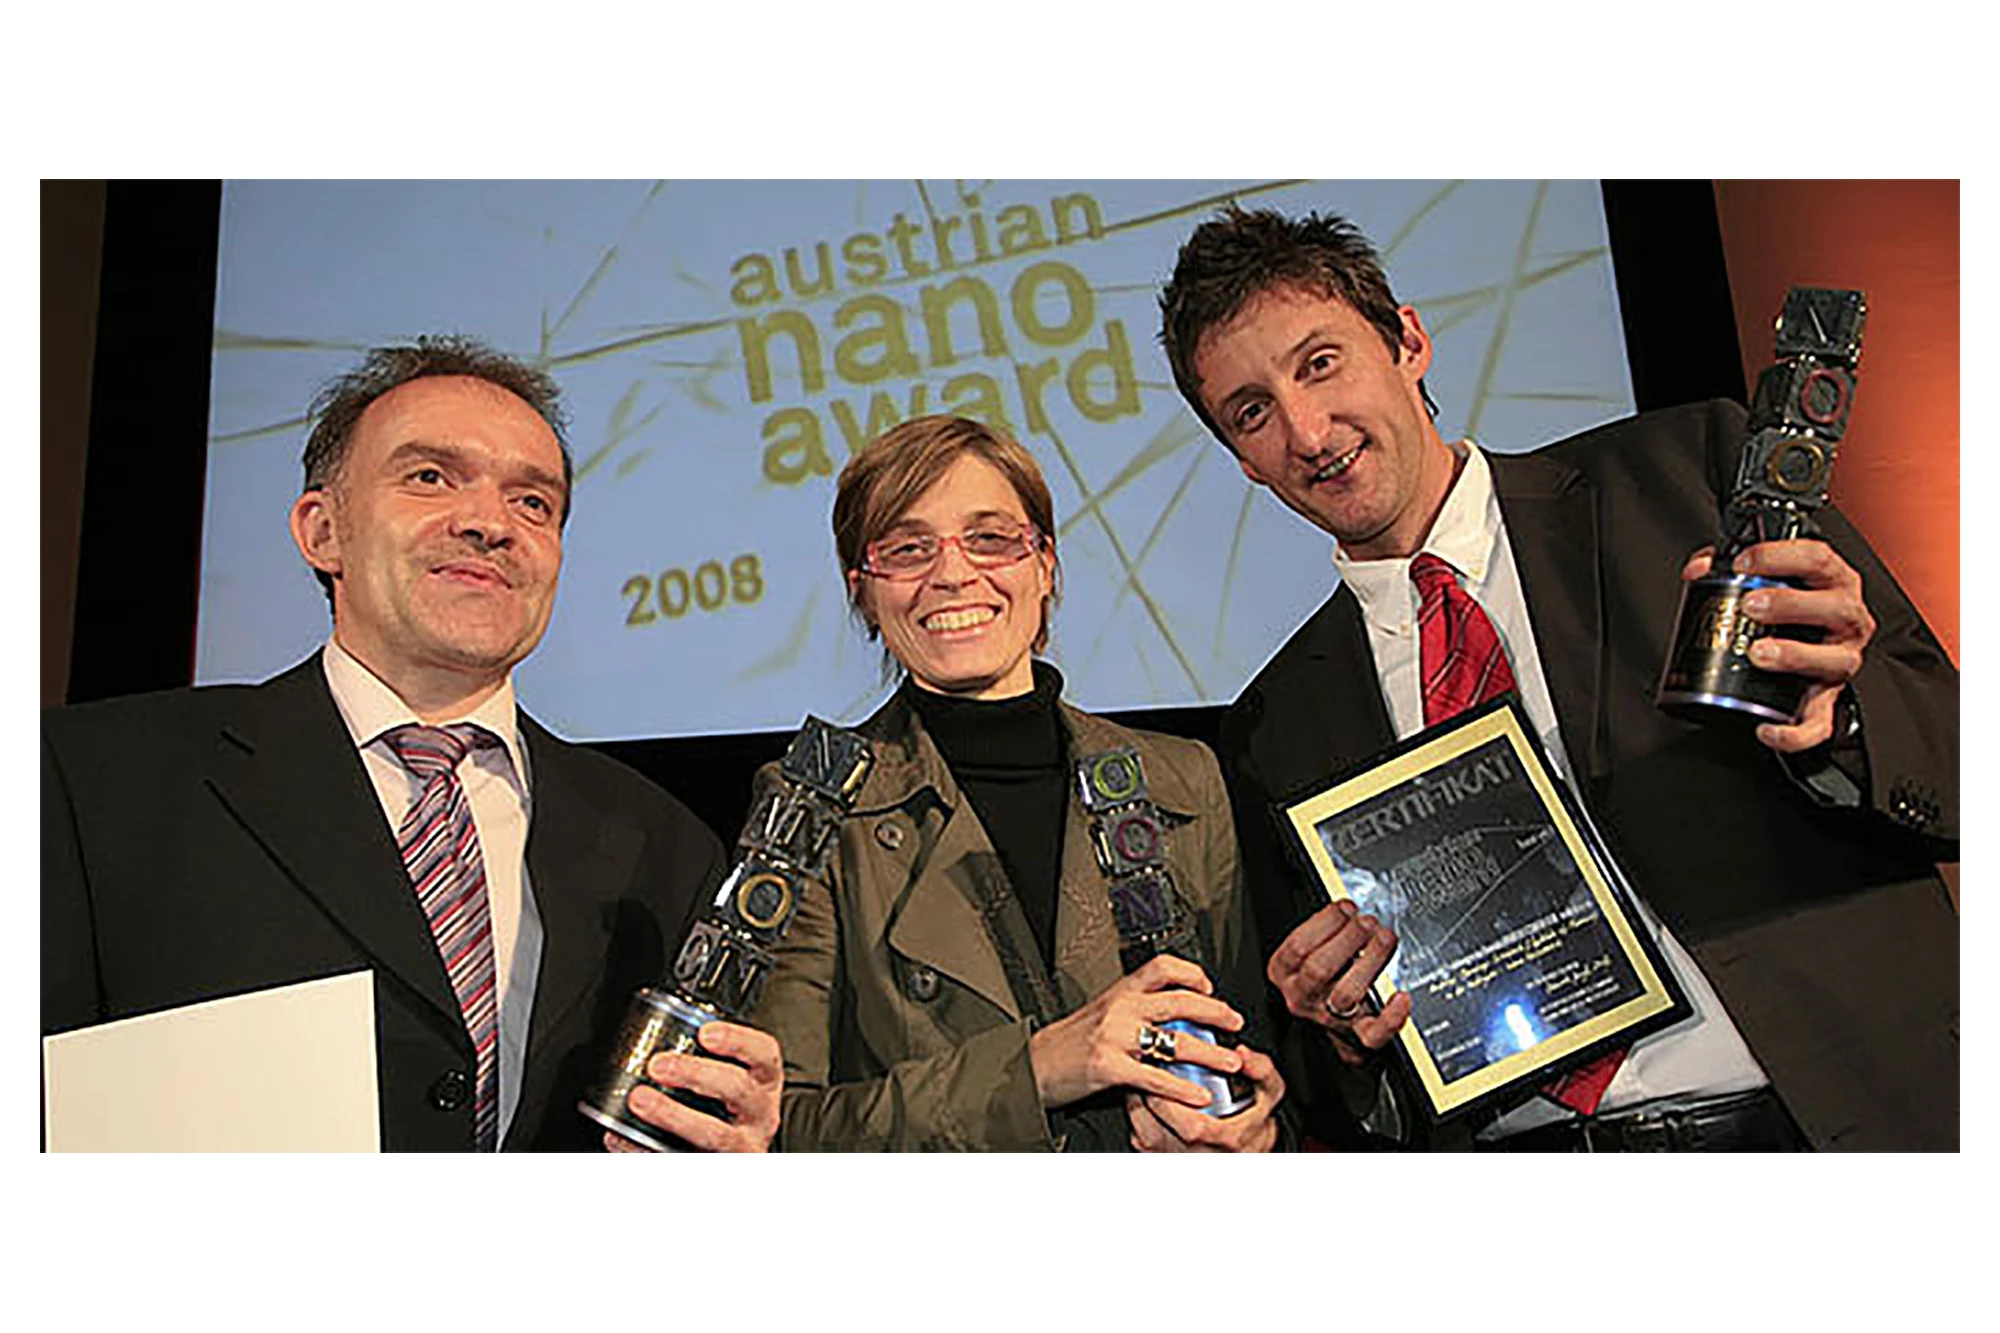 Austrian Nonobusiness Award